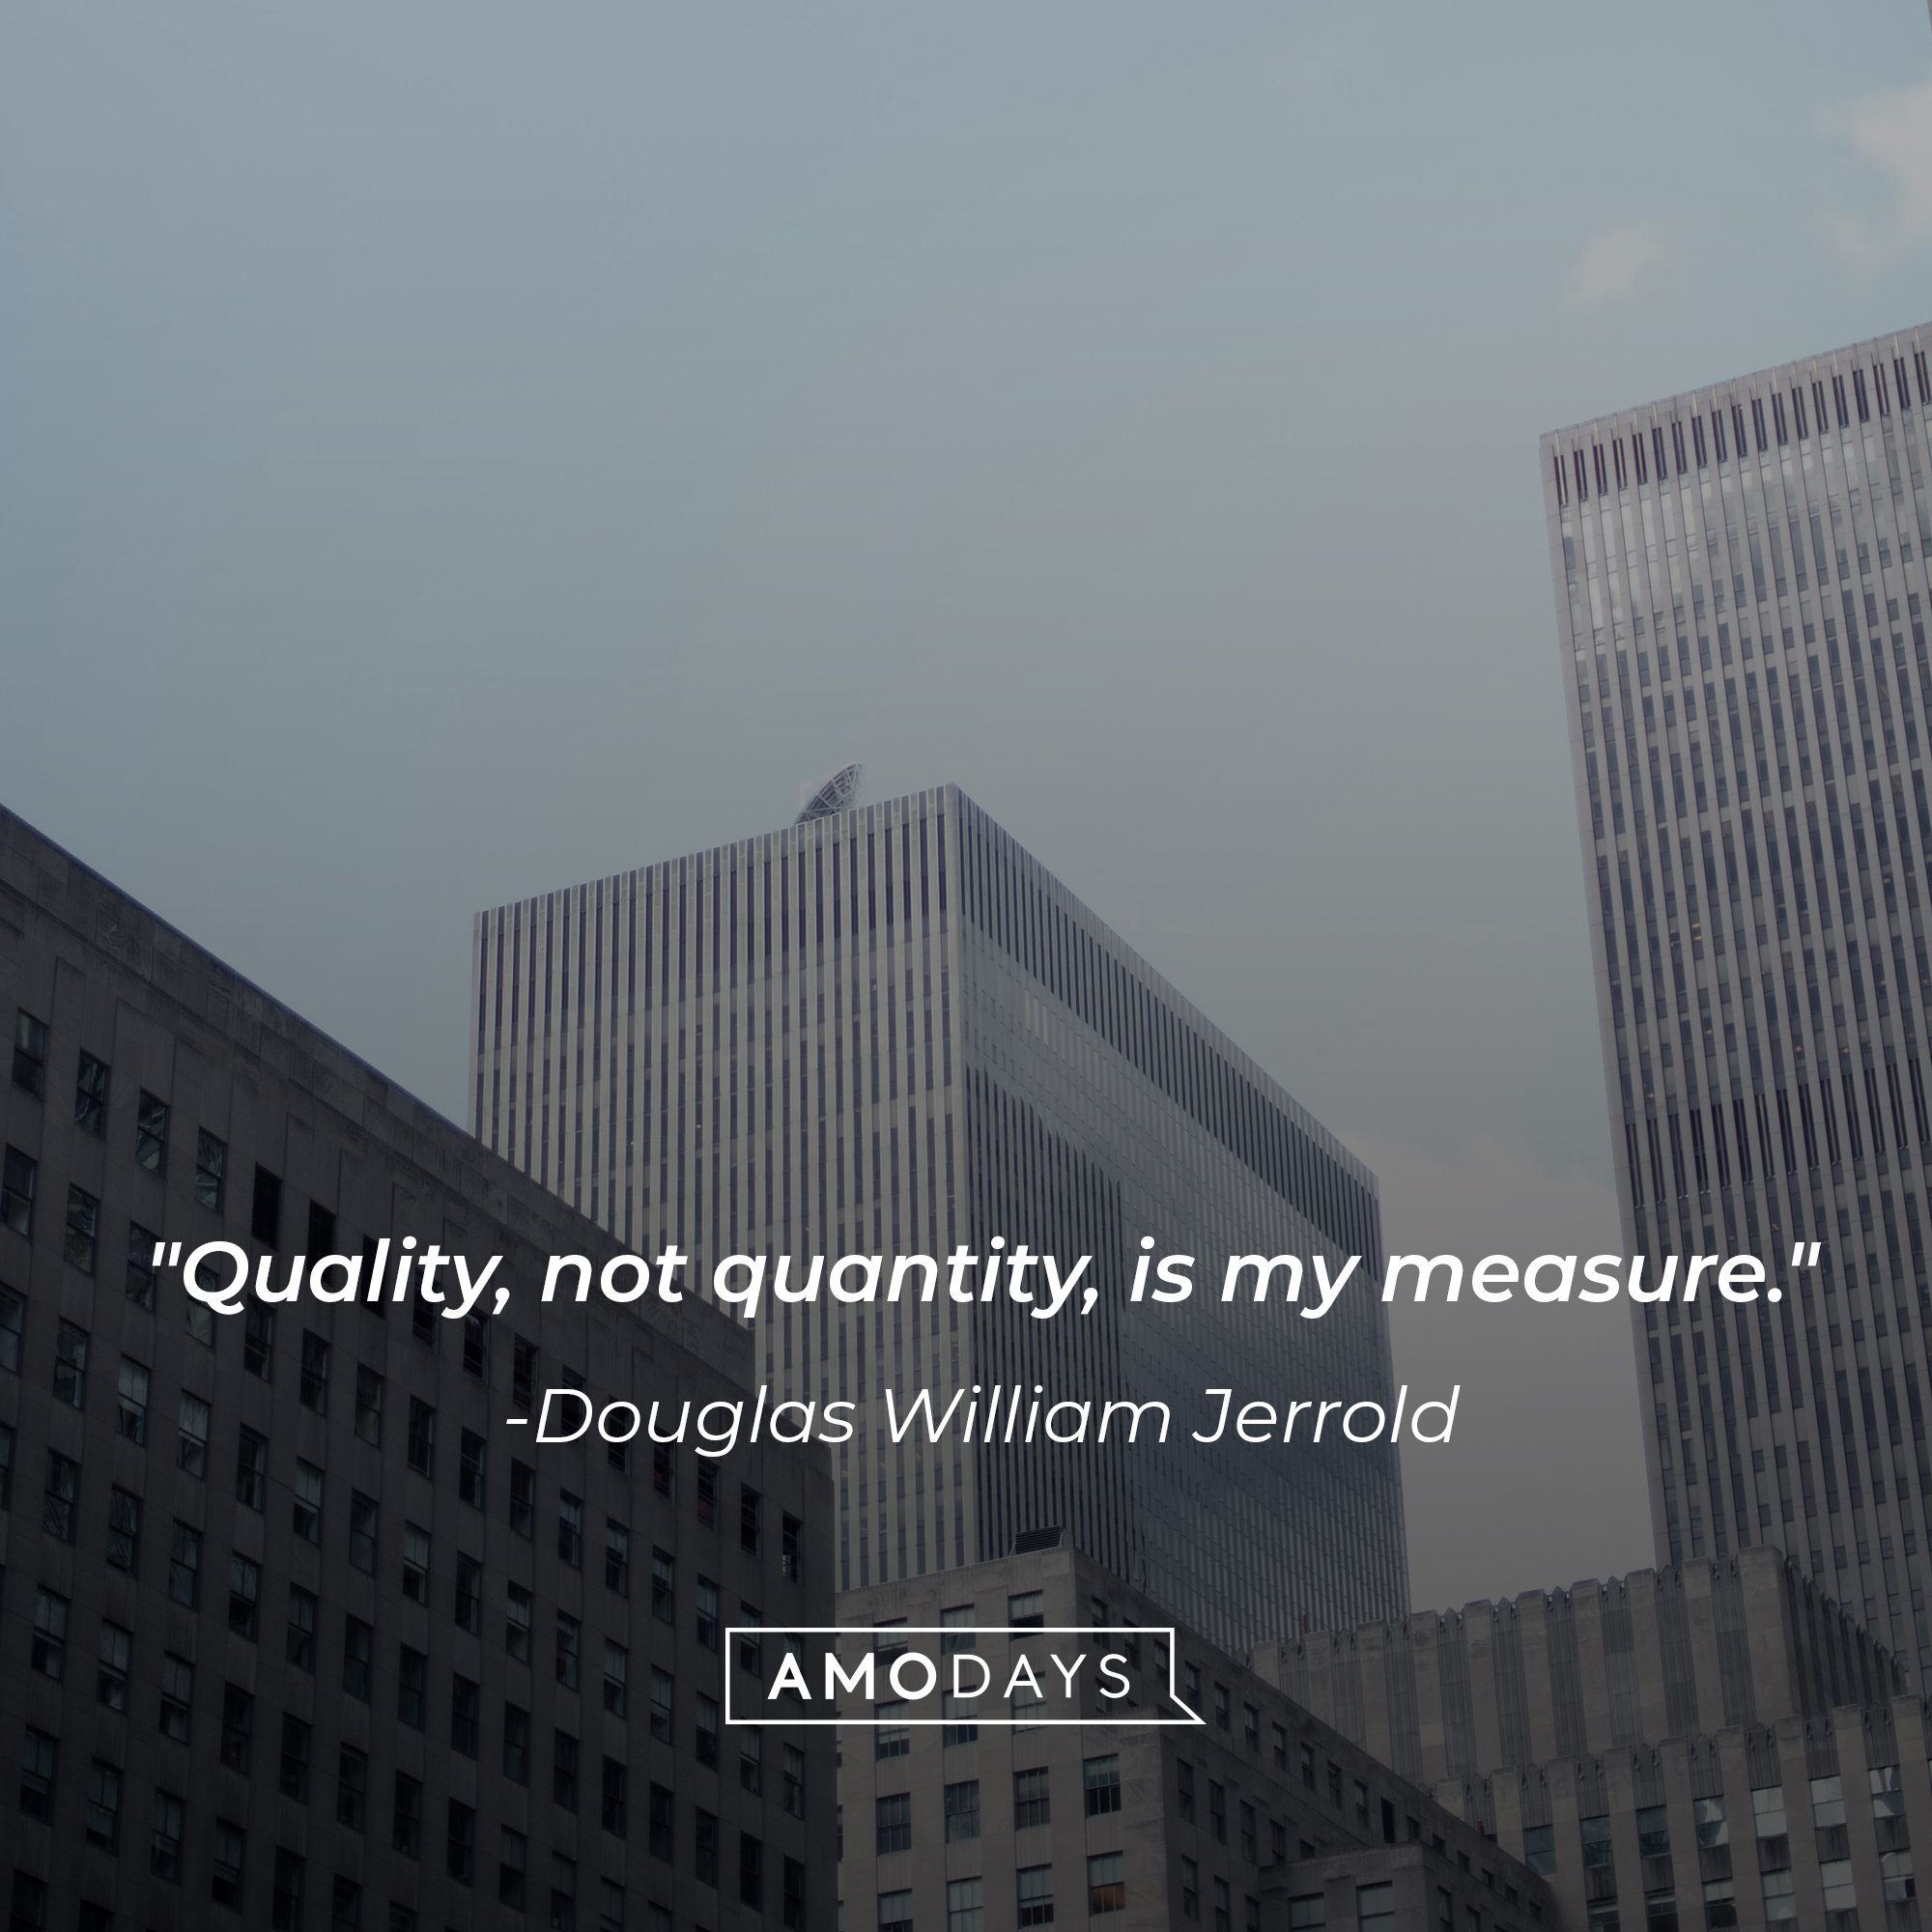 Douglas William Jerrold’s quote: "Quality, not quantity, is my measure." | Image: AmoDays 